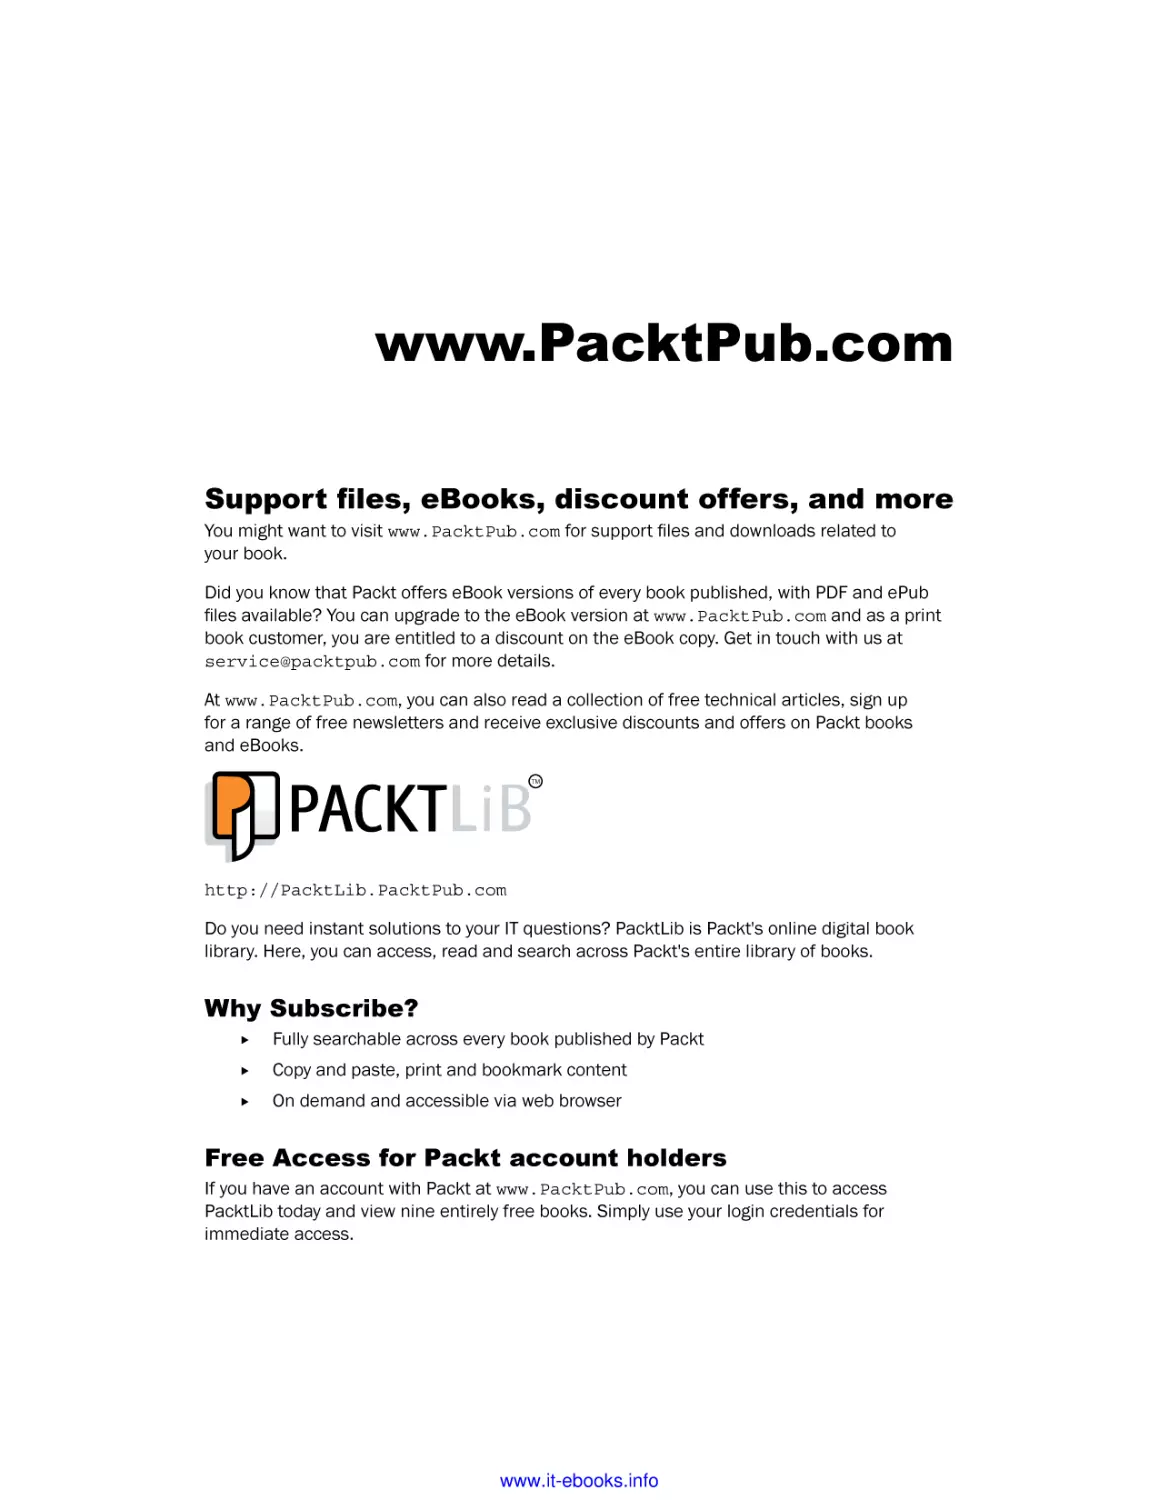 www.PacktPub.com